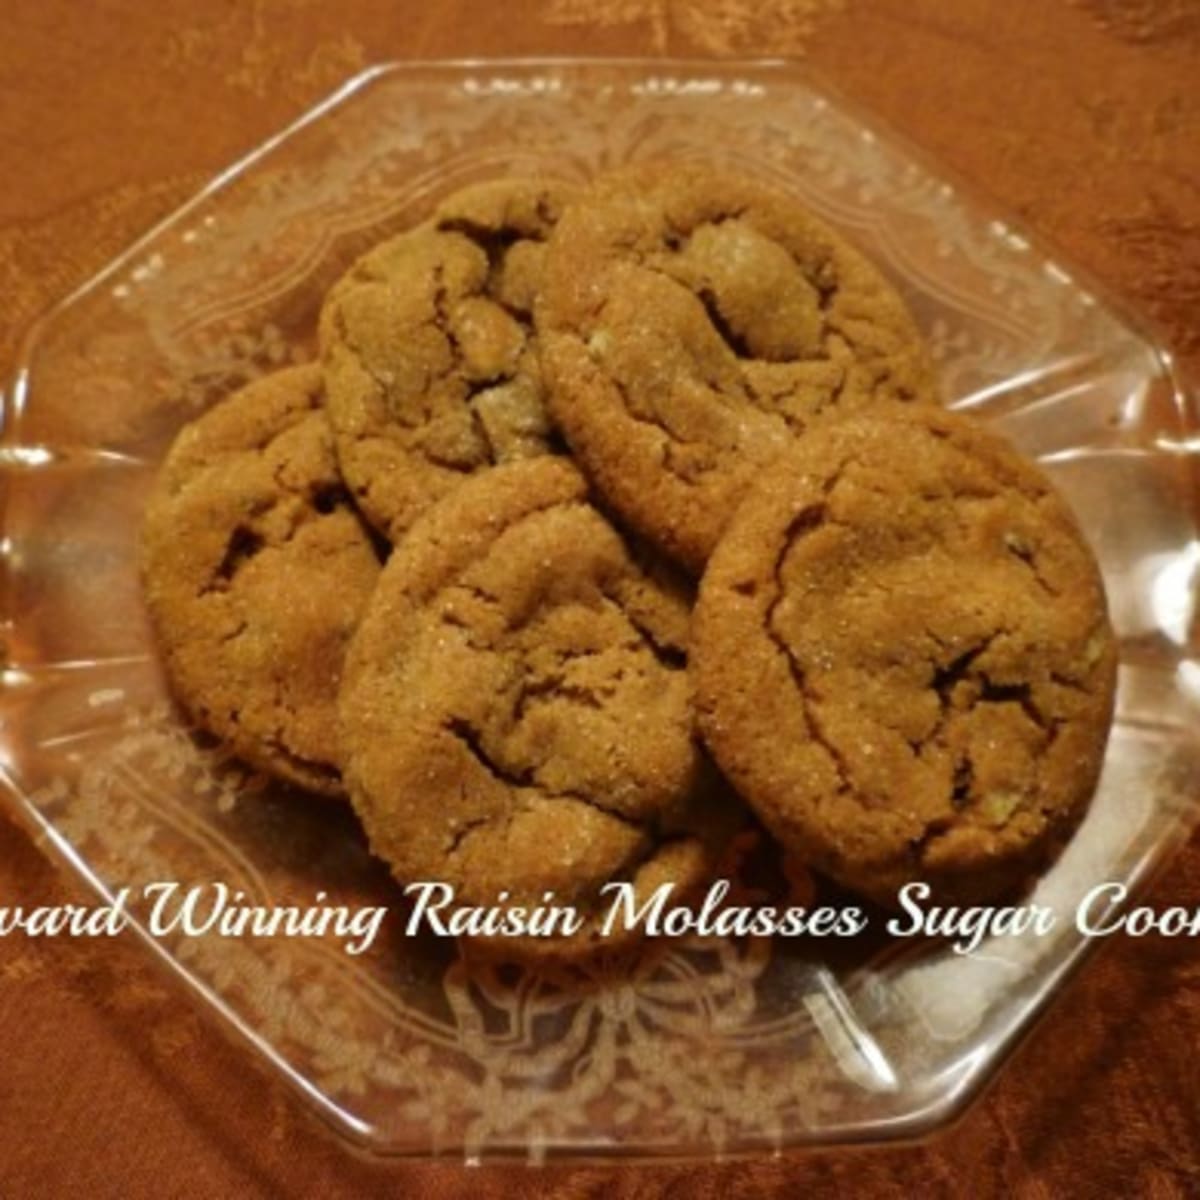 Irish Raisin Cookies R Ed Cipe : Irish Raisin Cookies R Ed Cipe - 200 Gluten Free Cookie ...